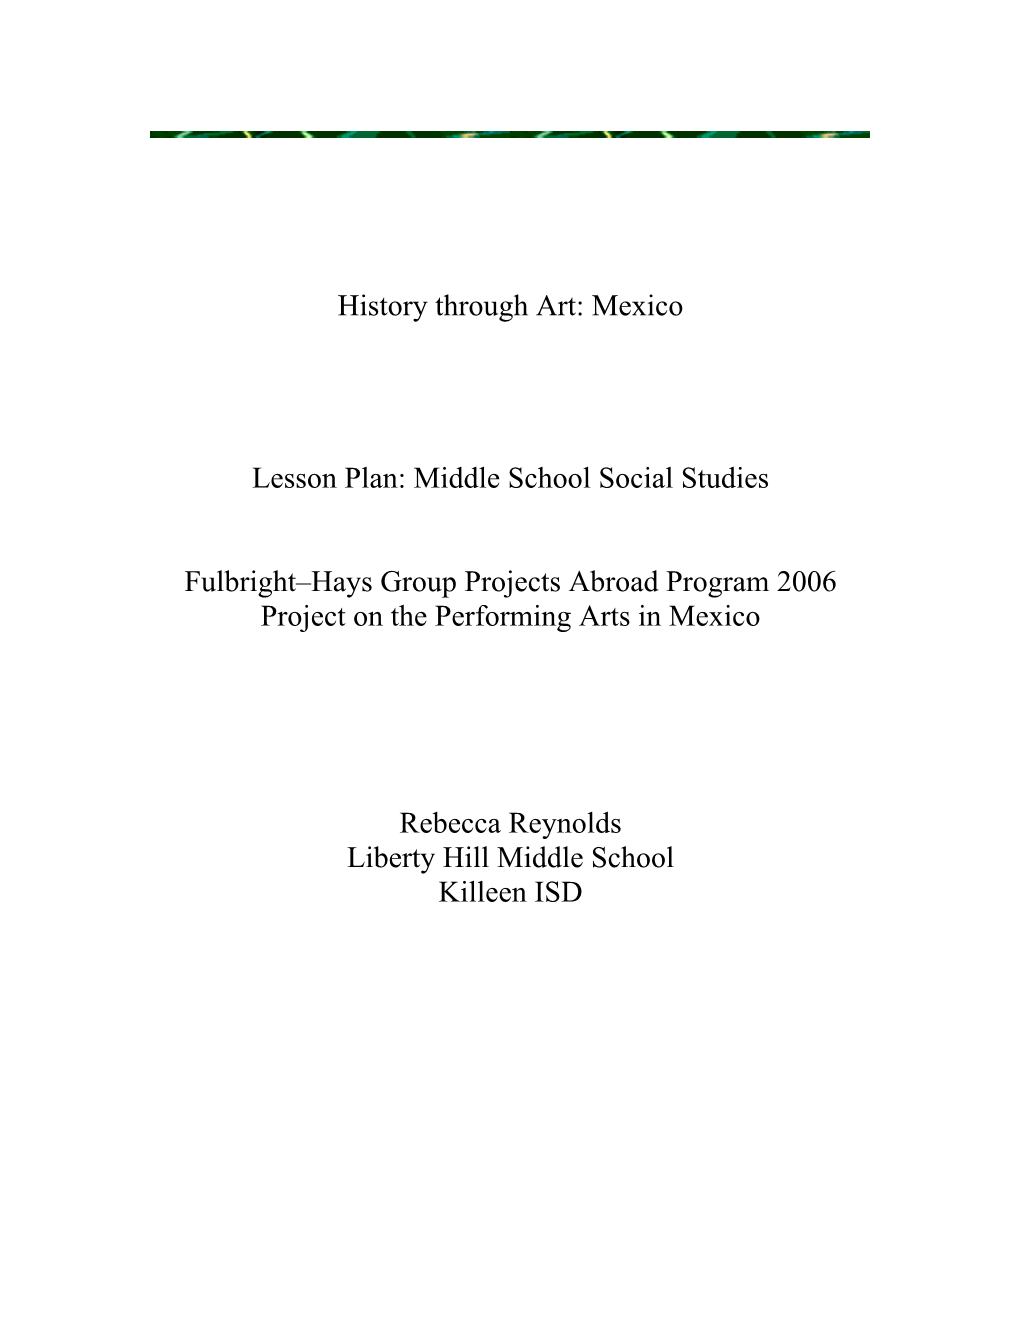 History Through Art: Mexico Lesson Plan: Middle School Social Studies